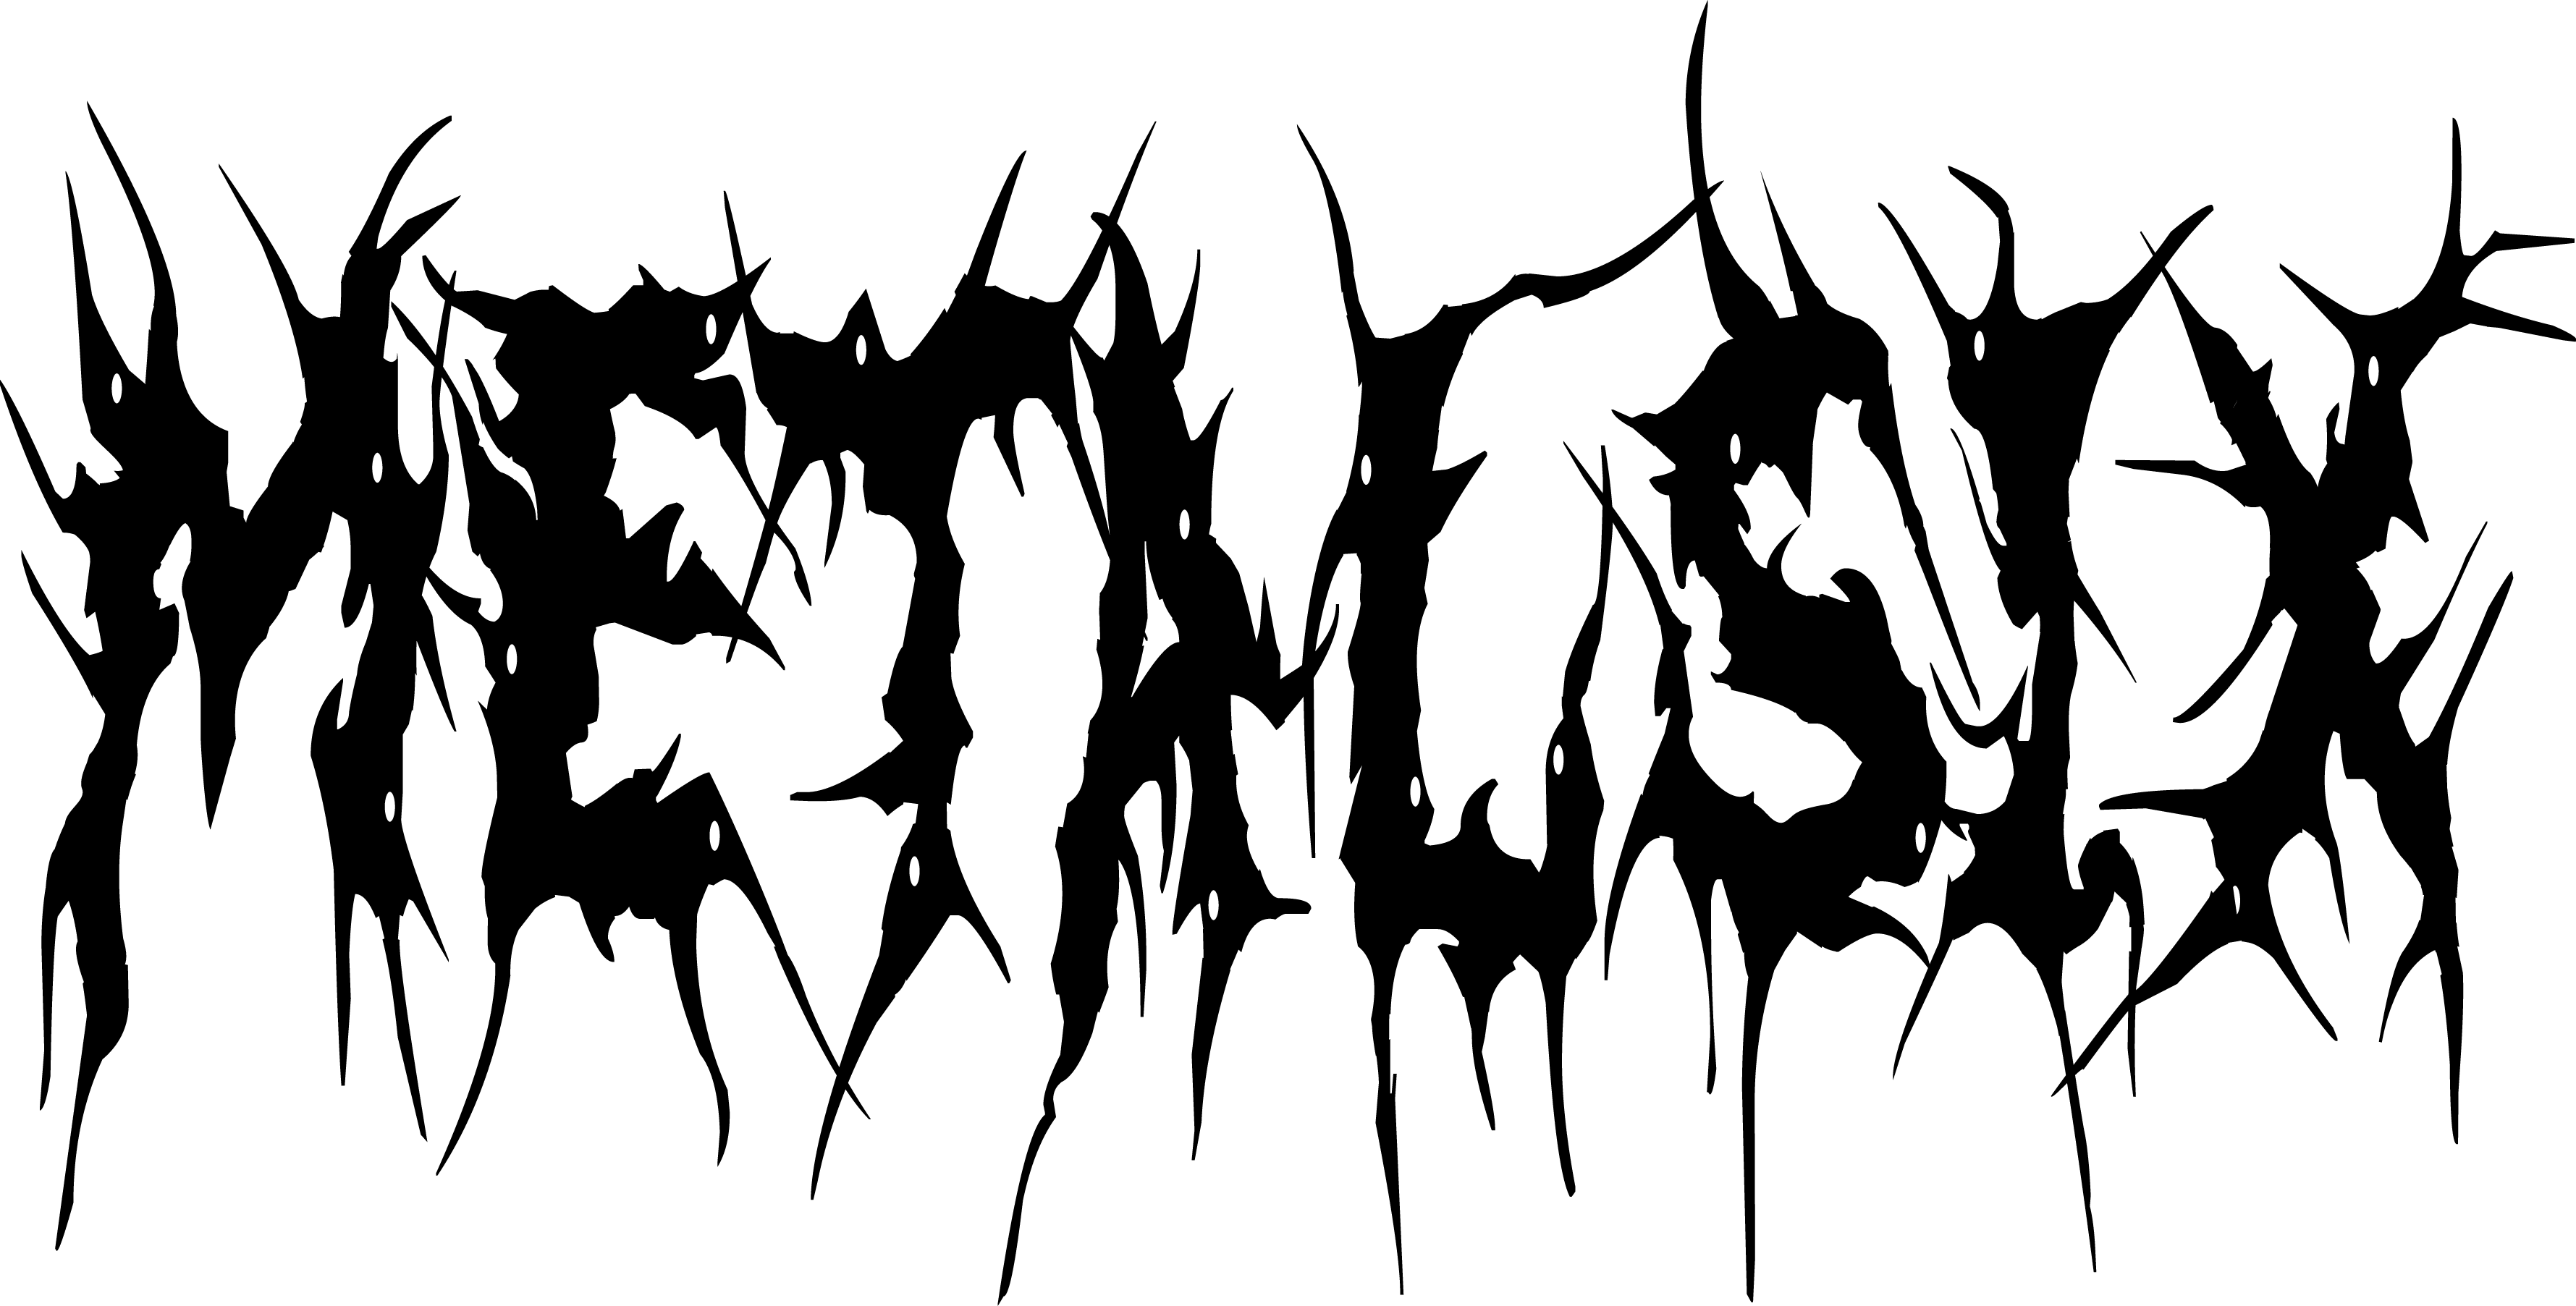 logo-dark